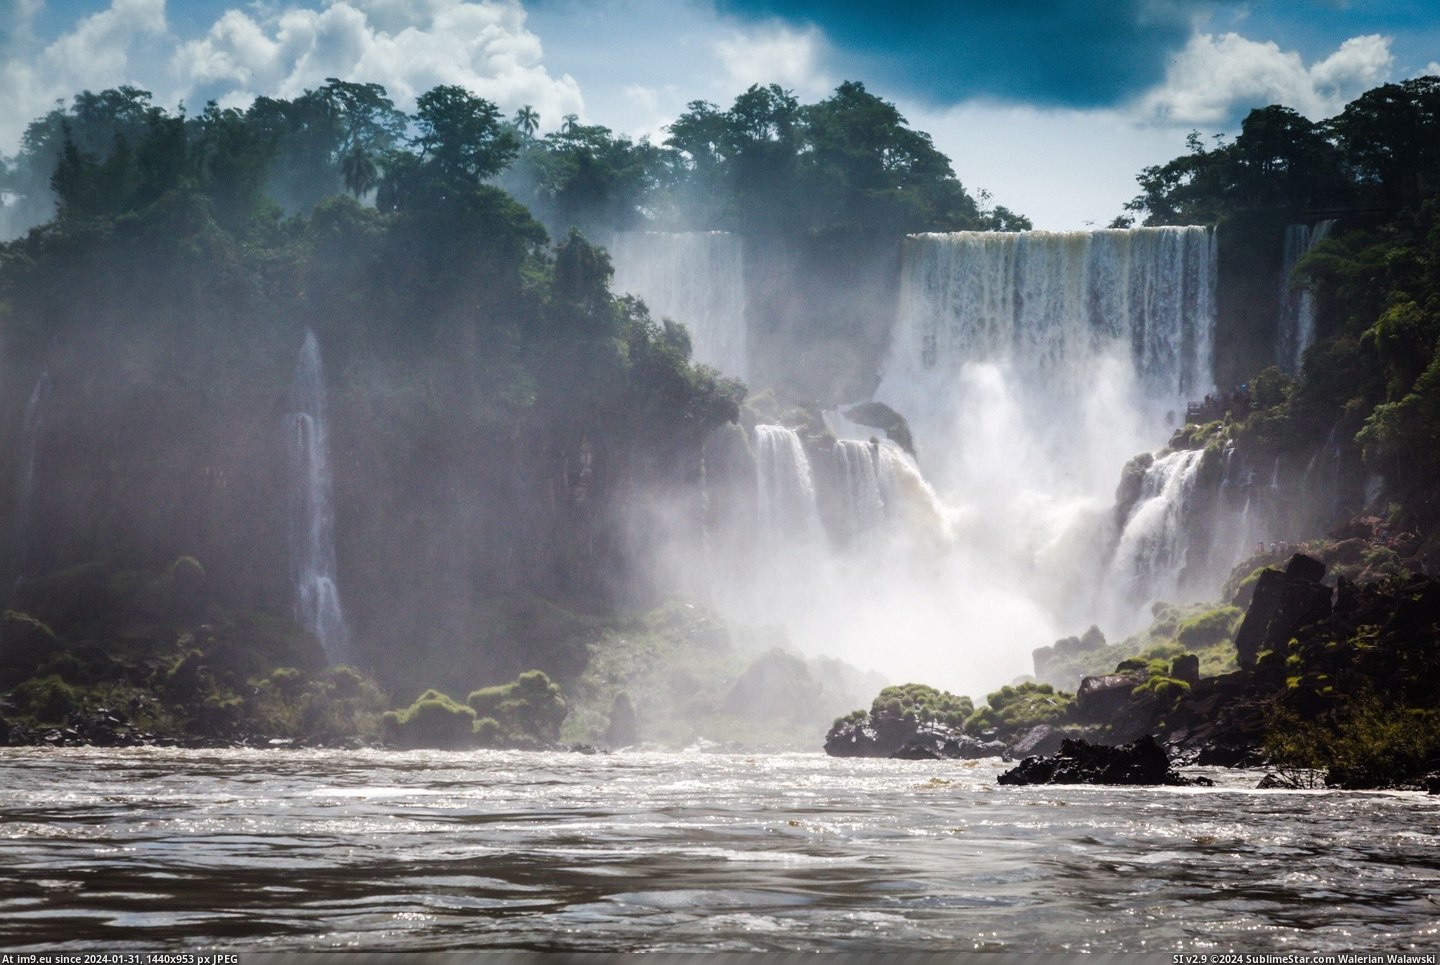 #Falls #Iguazu #Vacation [Earthporn] [OC] Iguazu Falls, taken by me, zenryhao, on vacation. [3204 x 1506] Pic. (Изображение из альбом My r/EARTHPORN favs))